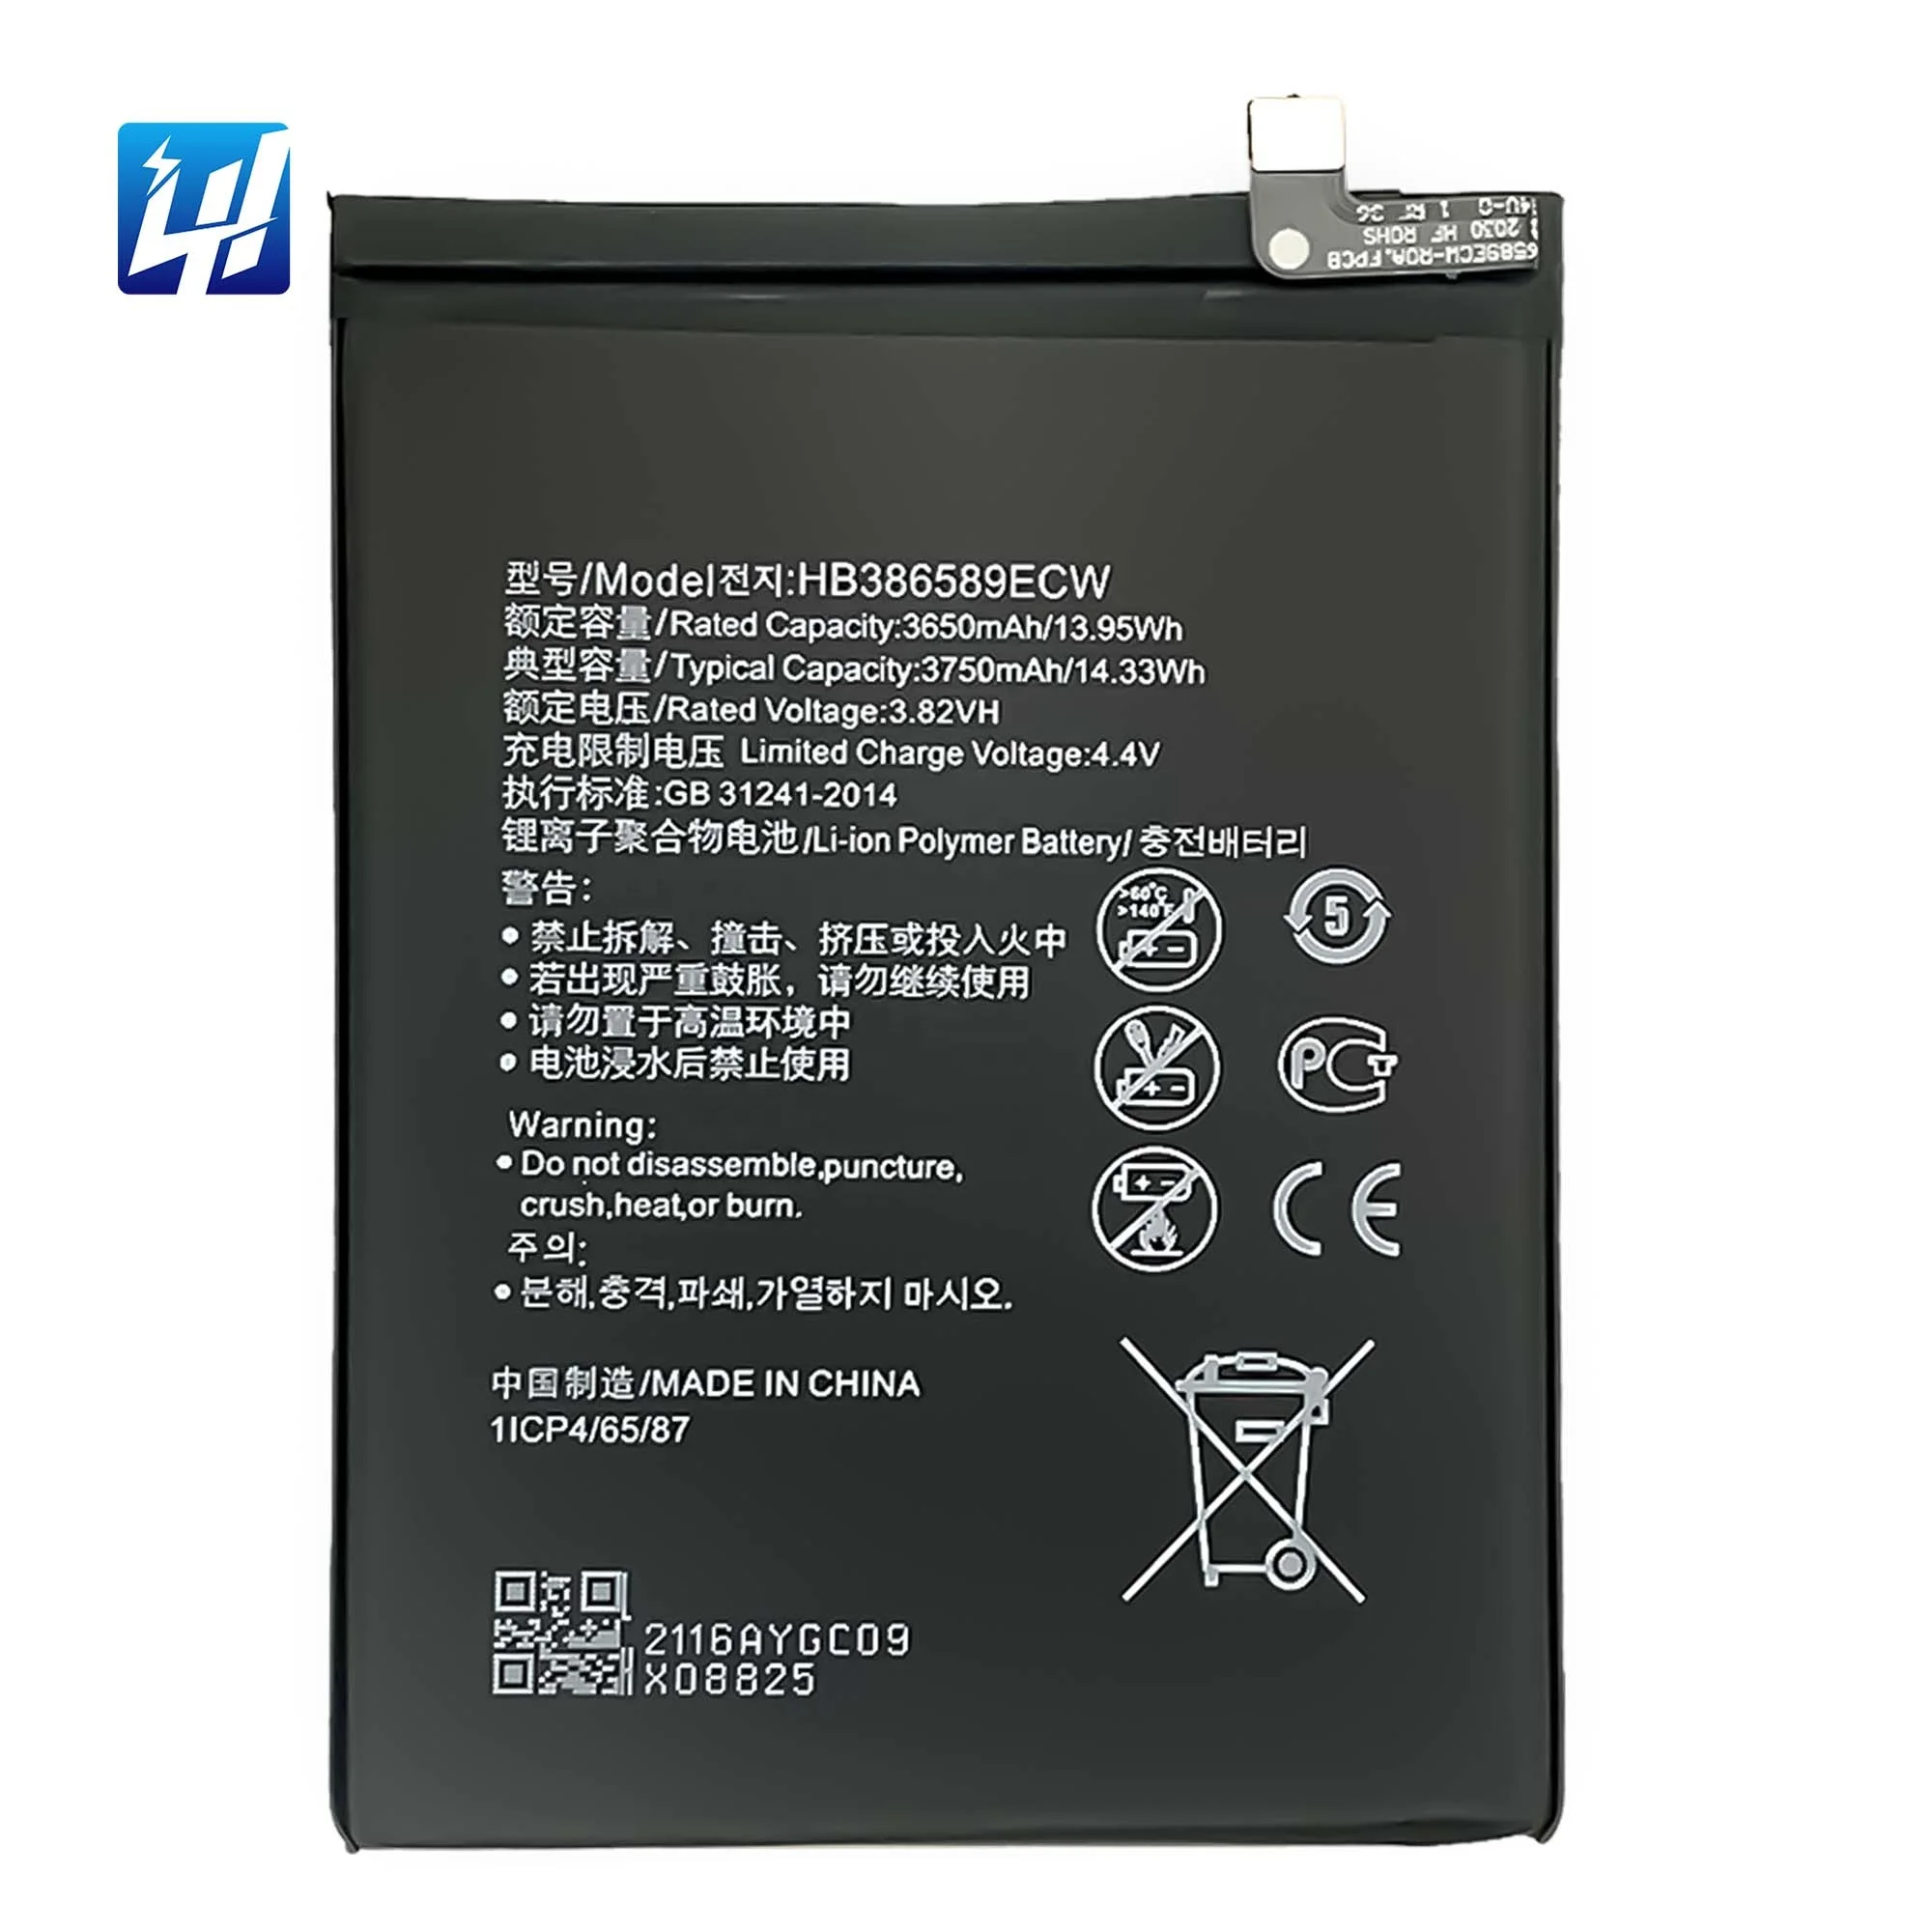 

Nova 3a P10 Plus HB386589ECW Rechargeable Li-Polymer Battery for HUAWEI P10 Pro